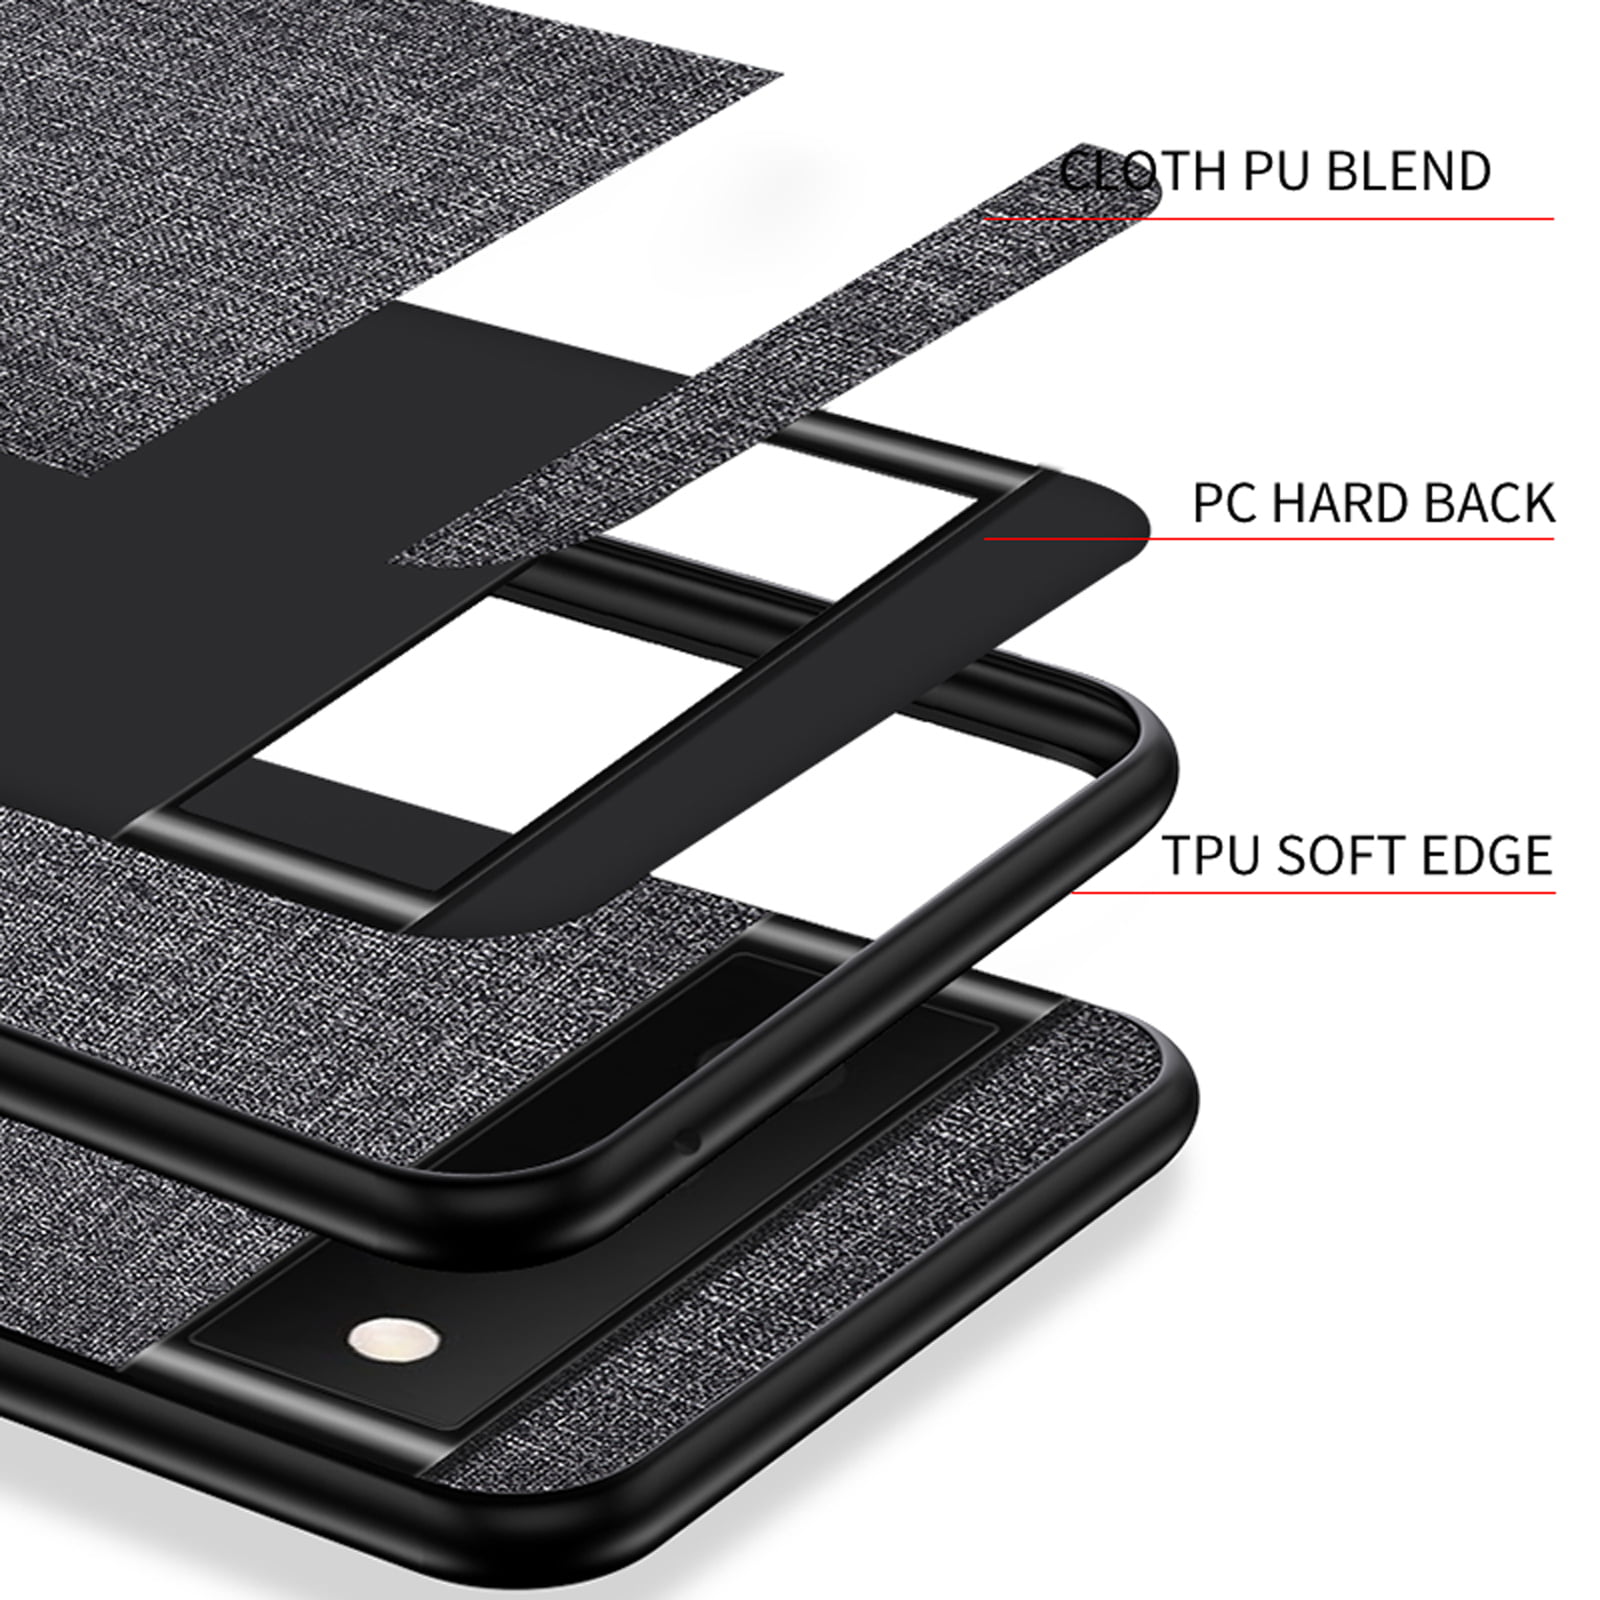 Anti-slip Ultra Thin Fabric Cloth Case For Google Pixel 7a 7 pro Anti-Drop  Phone Bag Cover For Google Pixel 7a 7 7pro Funda